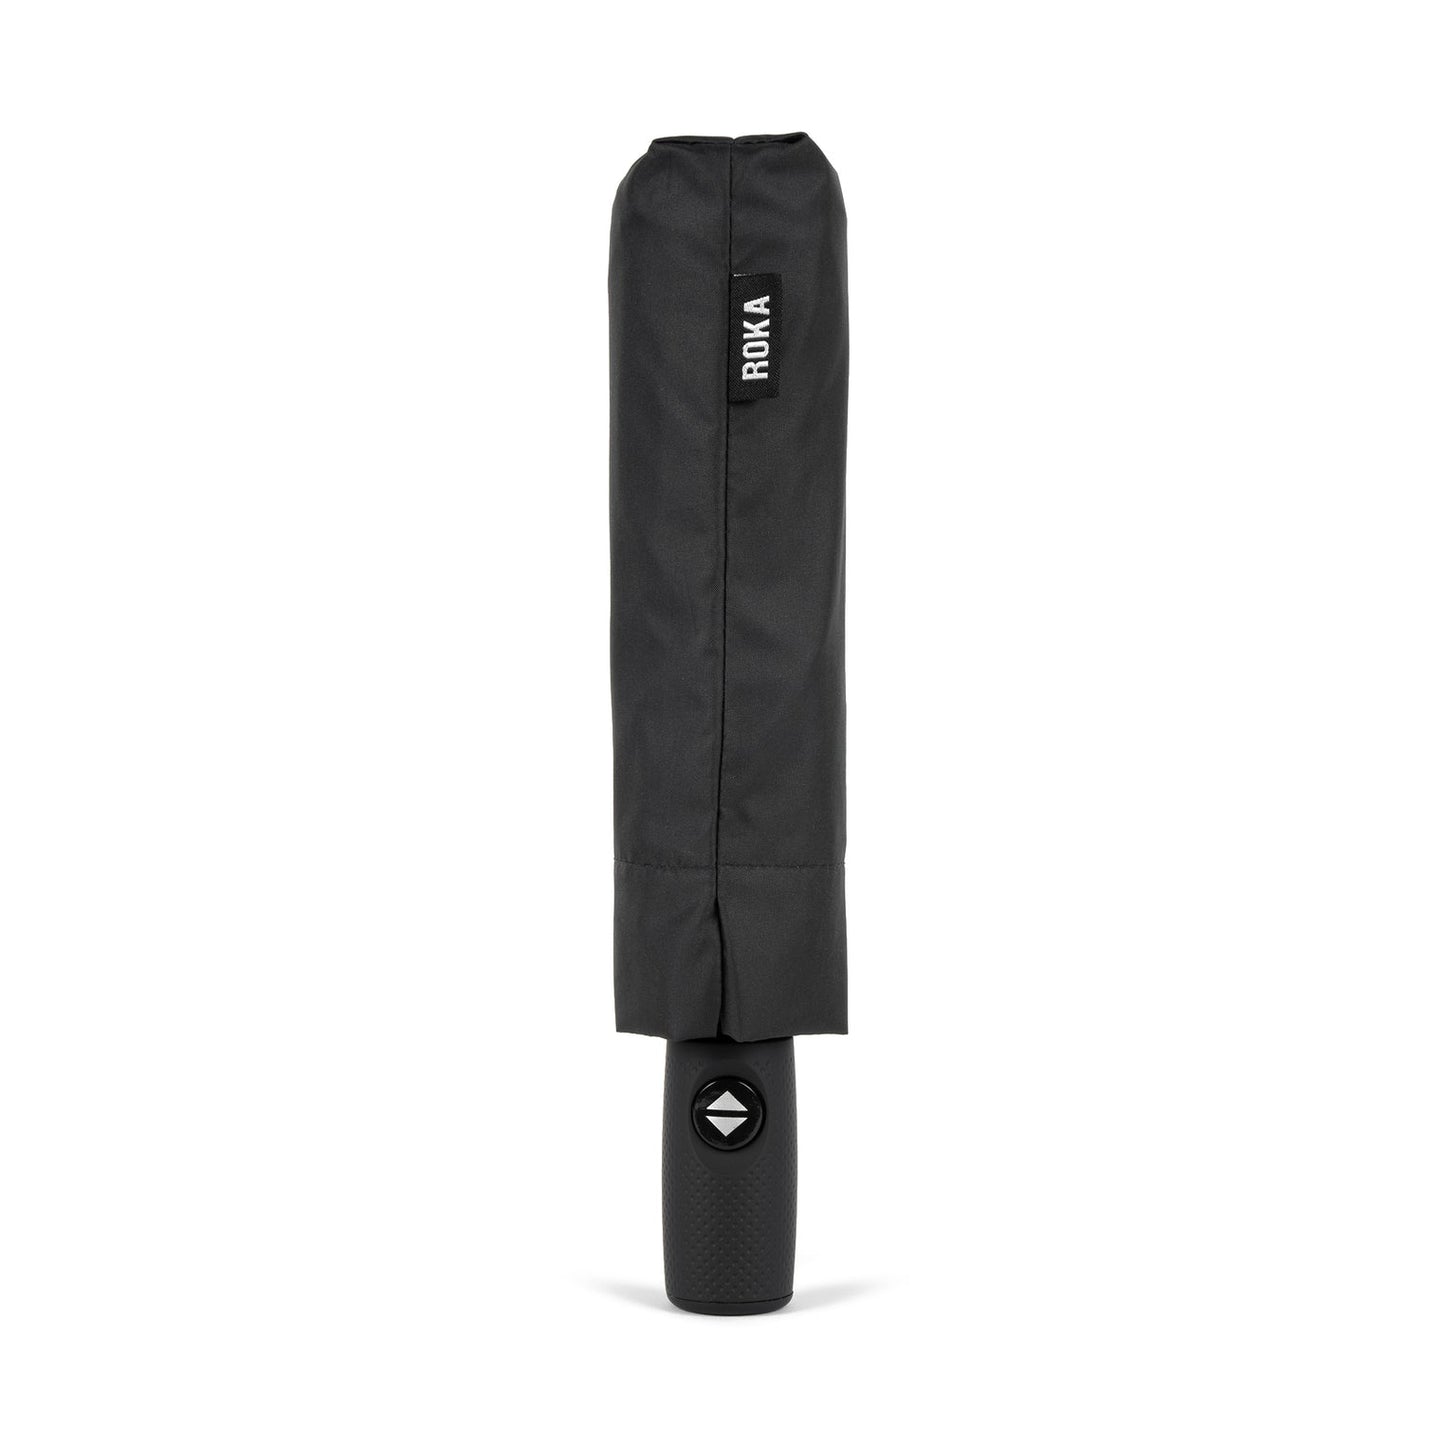 Waterloo black - recycled & eco-friendly umbrella